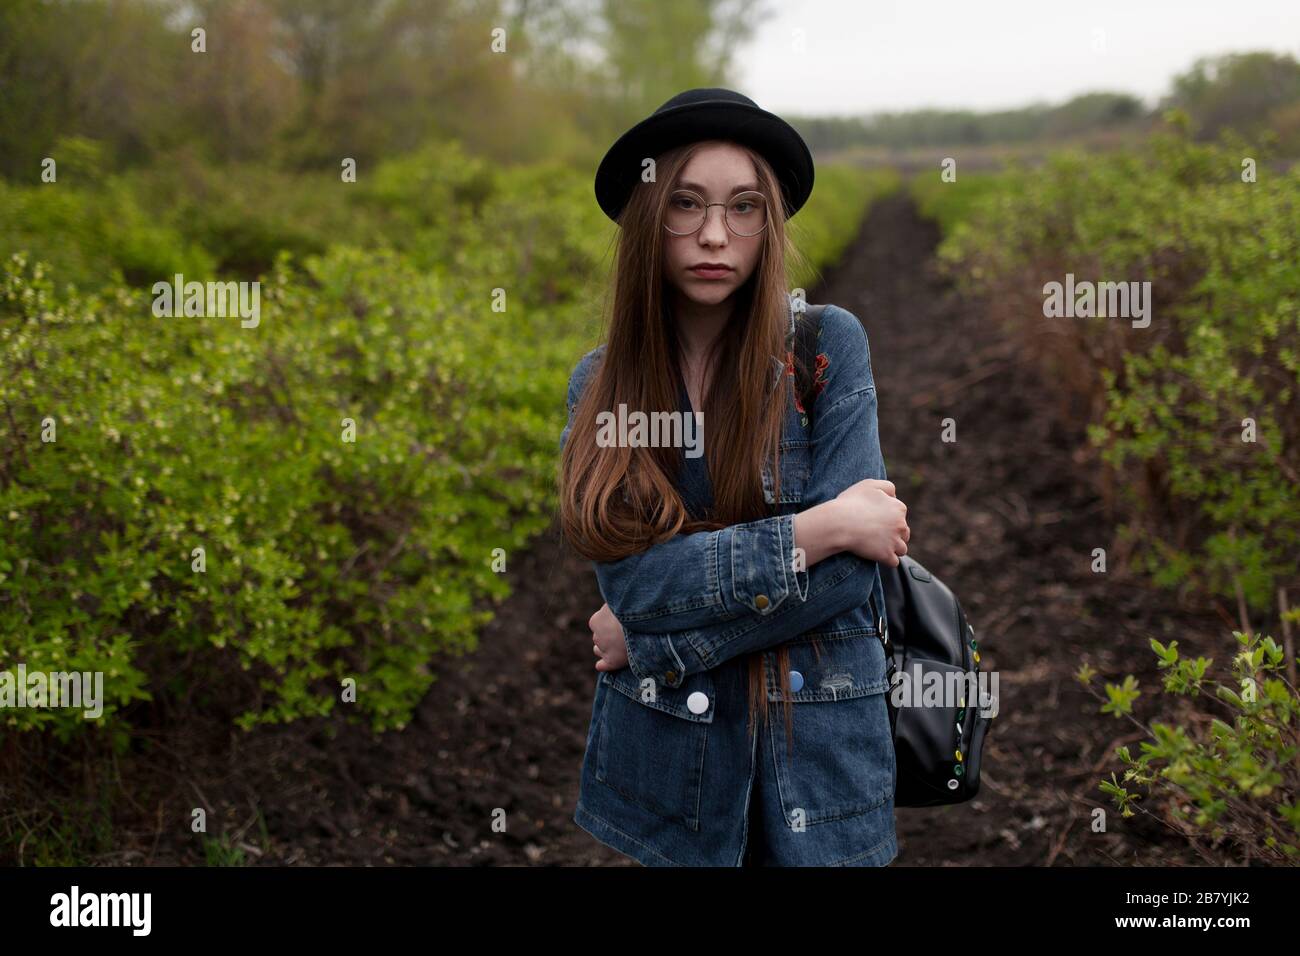 Junge Frau mit Jeansjacke im Feld stehend Stockfoto